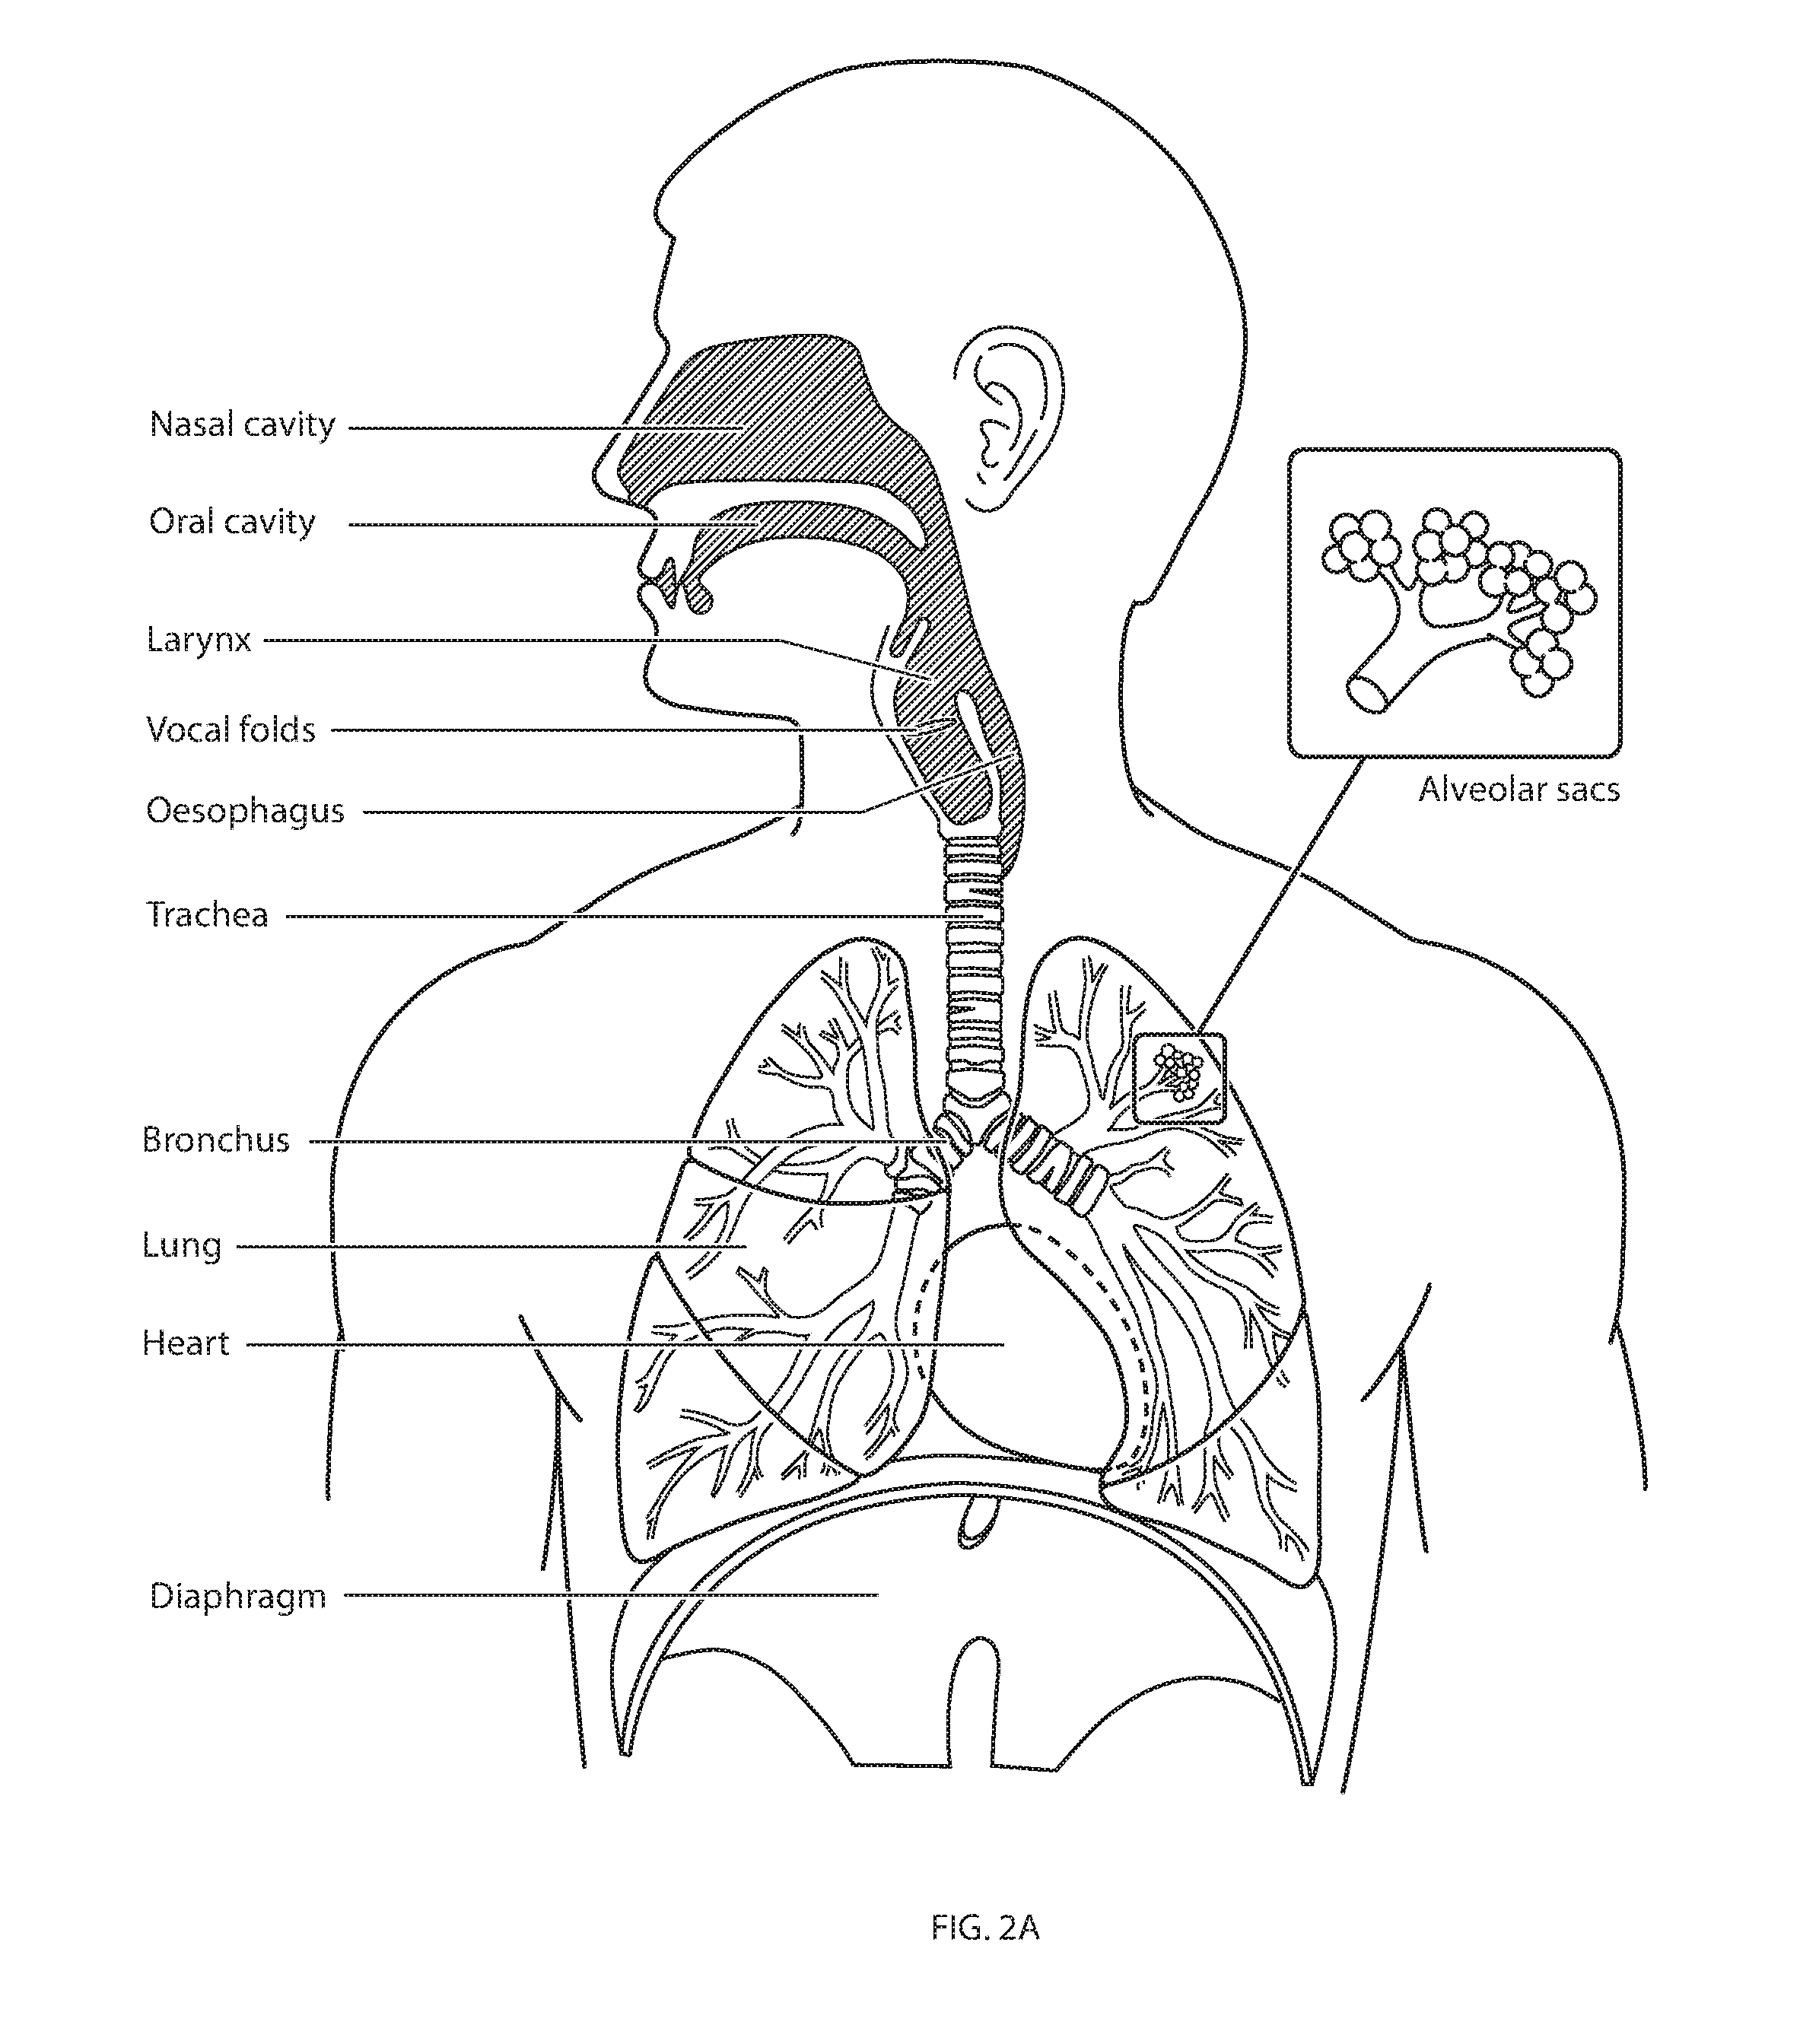 Respiratory therapy apparatus